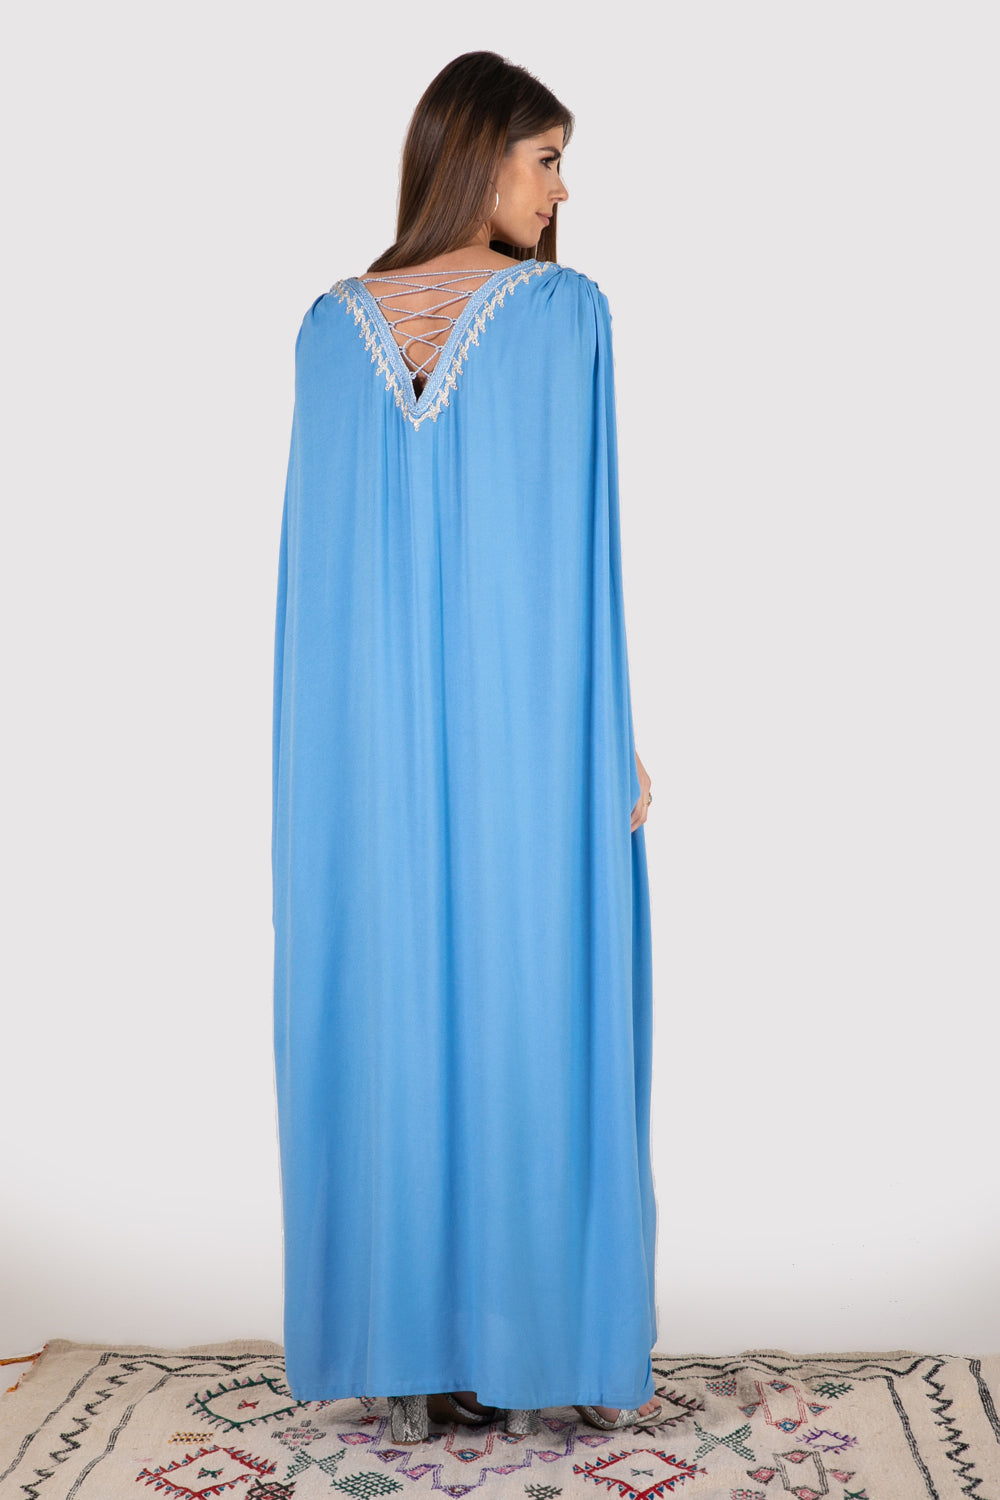 Gandoura Eloise lace-up dress in sky blue - diamantine-uk